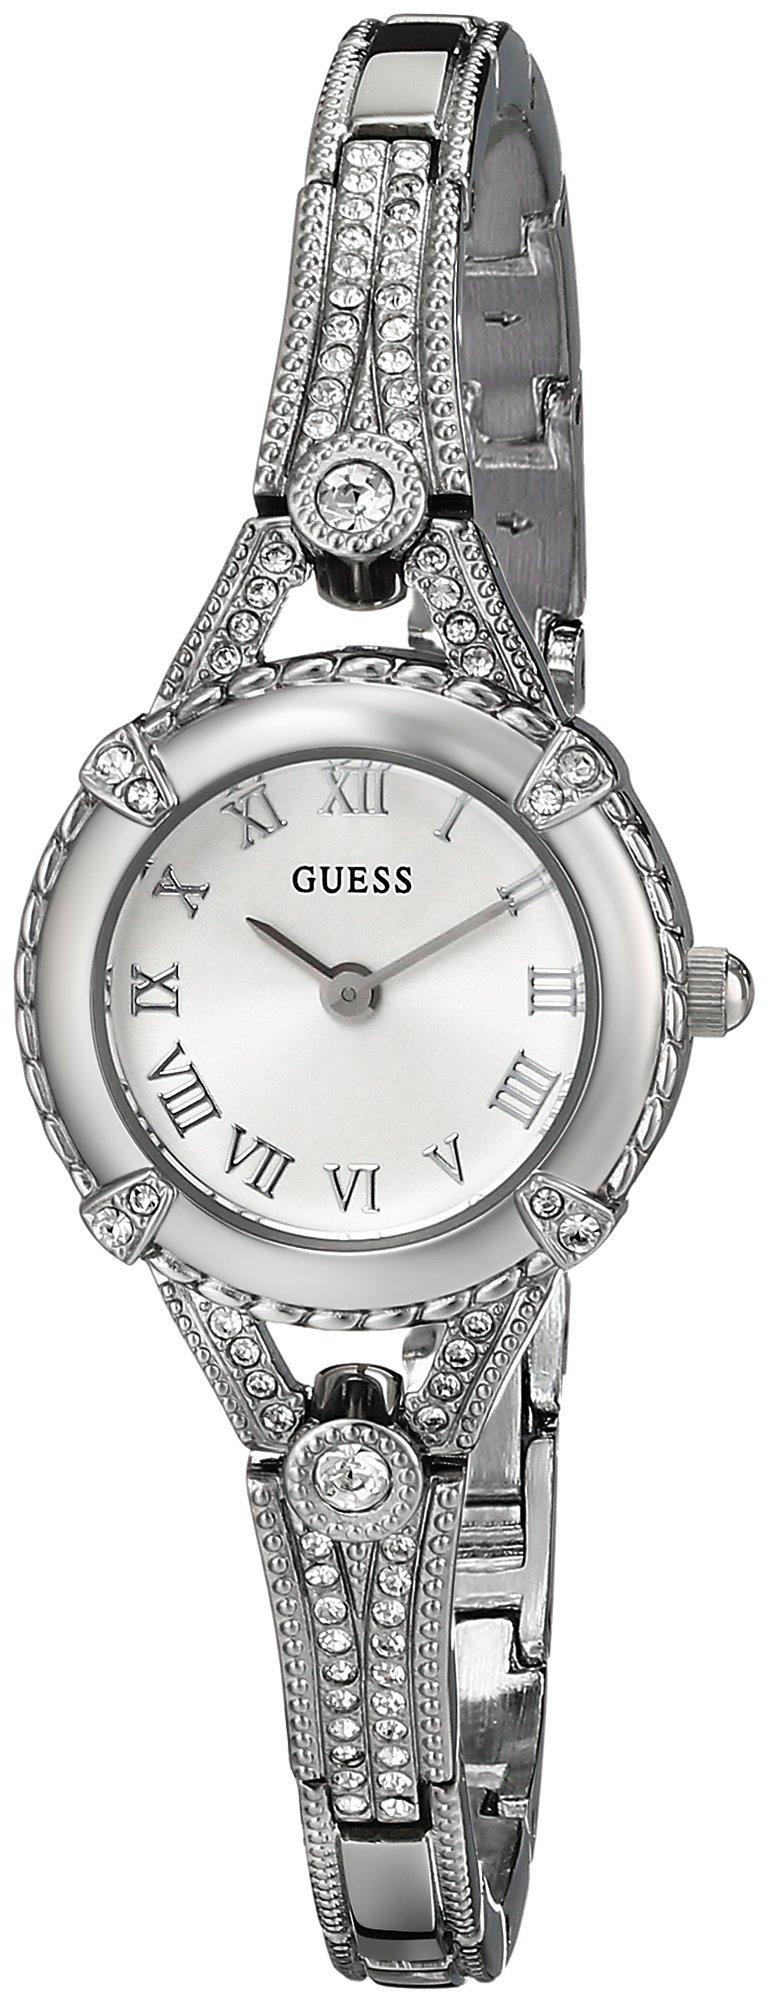 GUESS Petite Vintage Crystal Bracelet Watch with Self-Adjustable Links